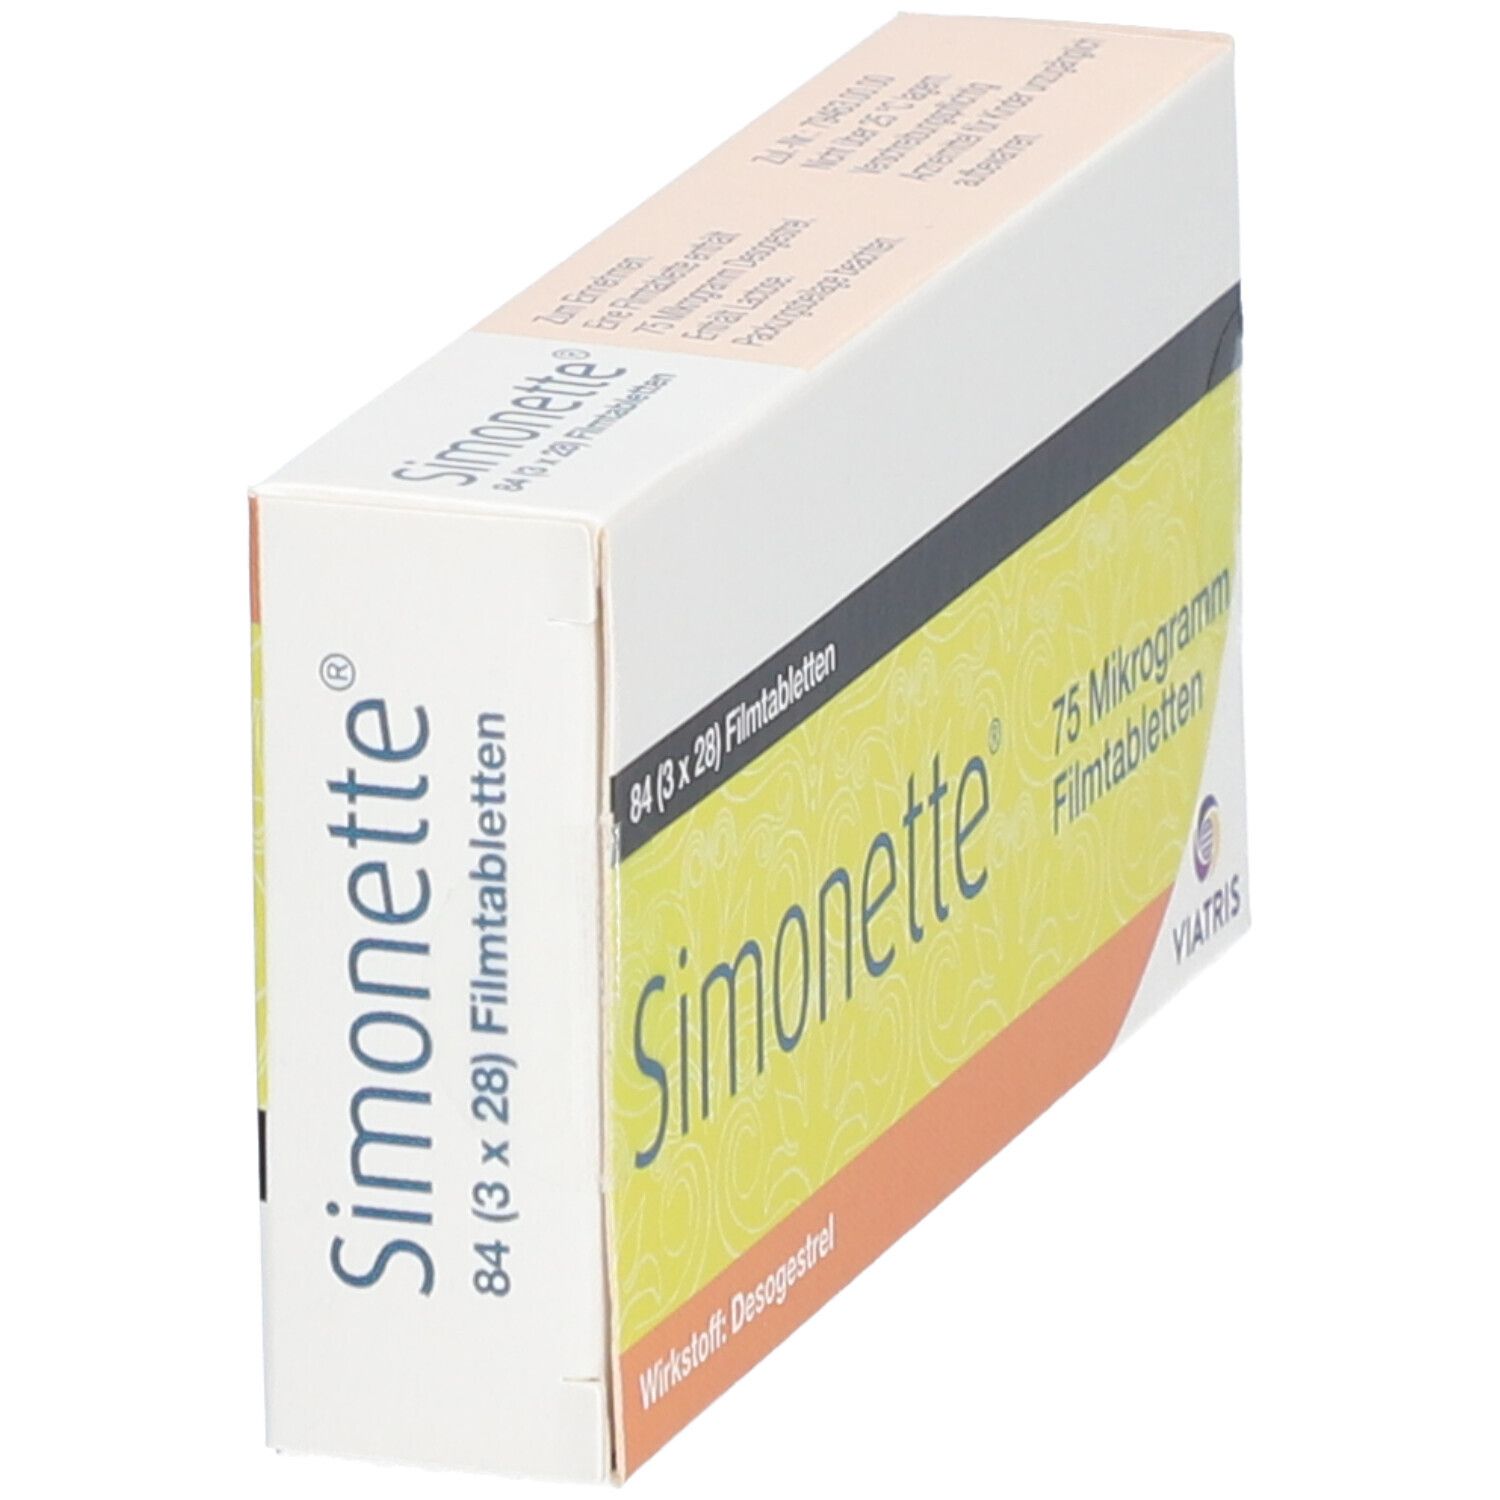 Simonette® 75 Mikrogramm